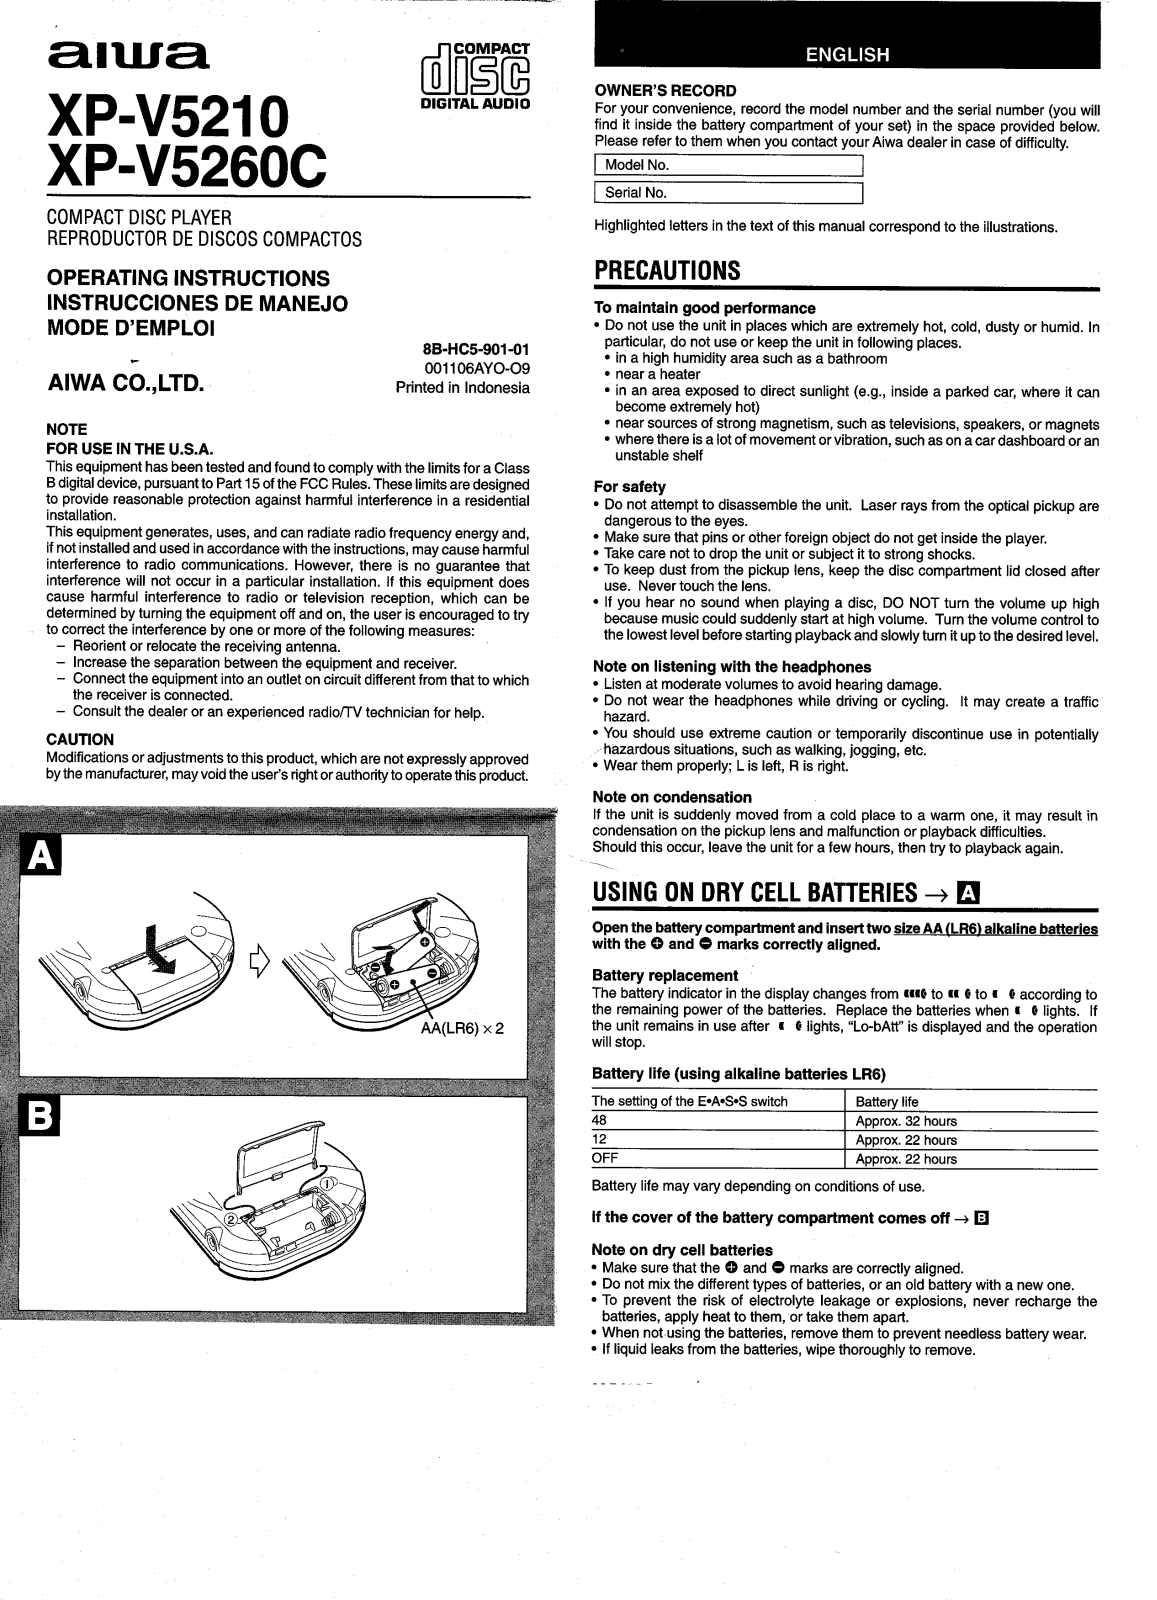 Sony XPV5210 User Manual